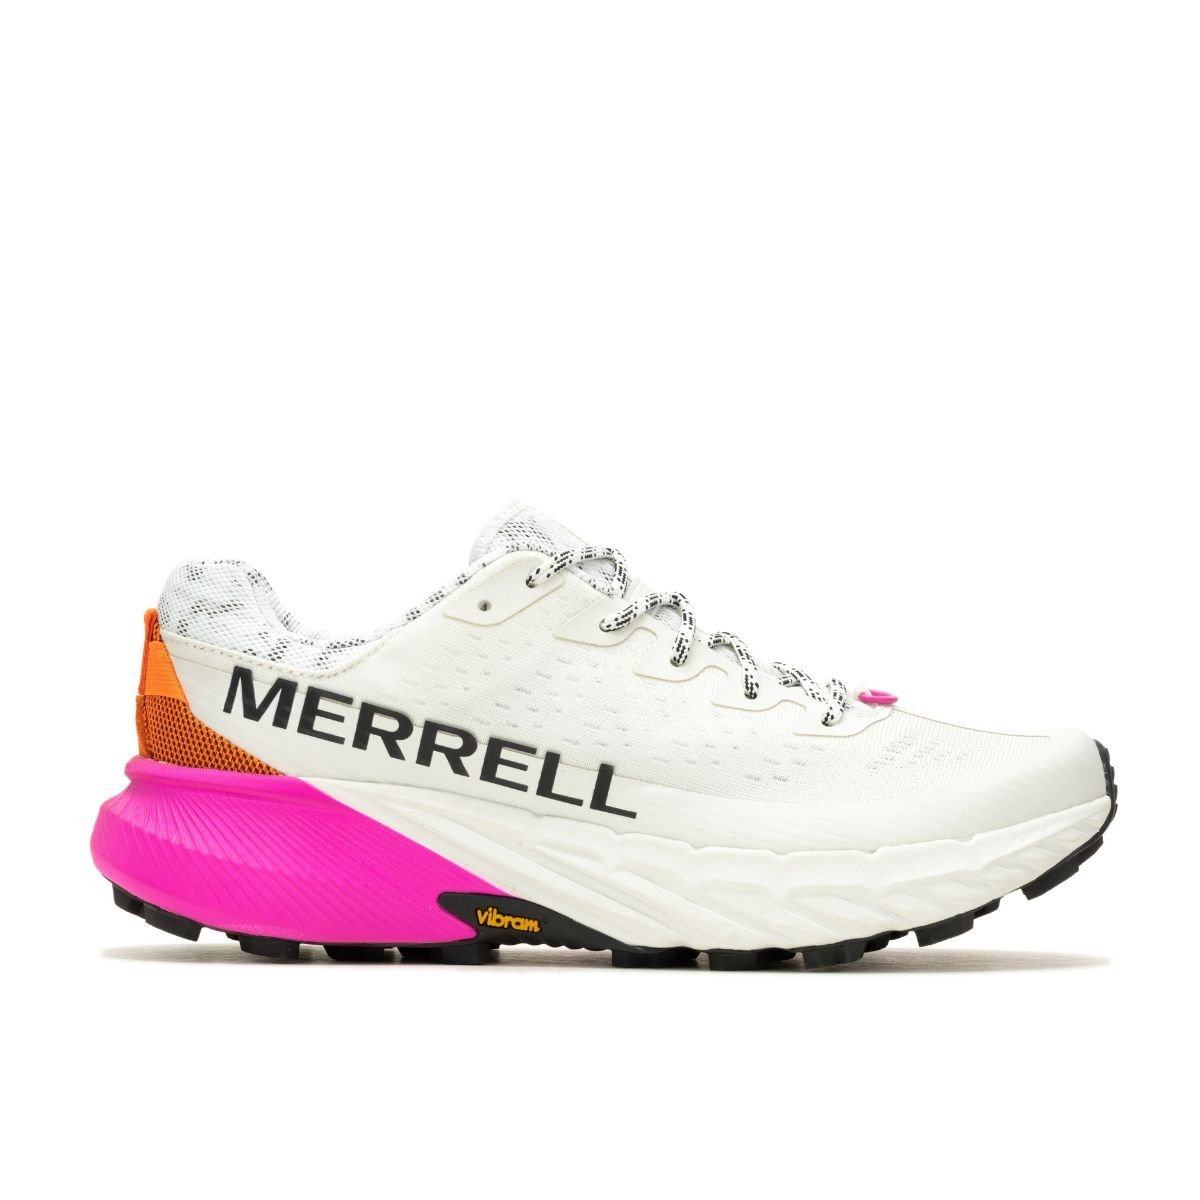 Topánky Merrell J068233 Agility Peak 5 M - biela